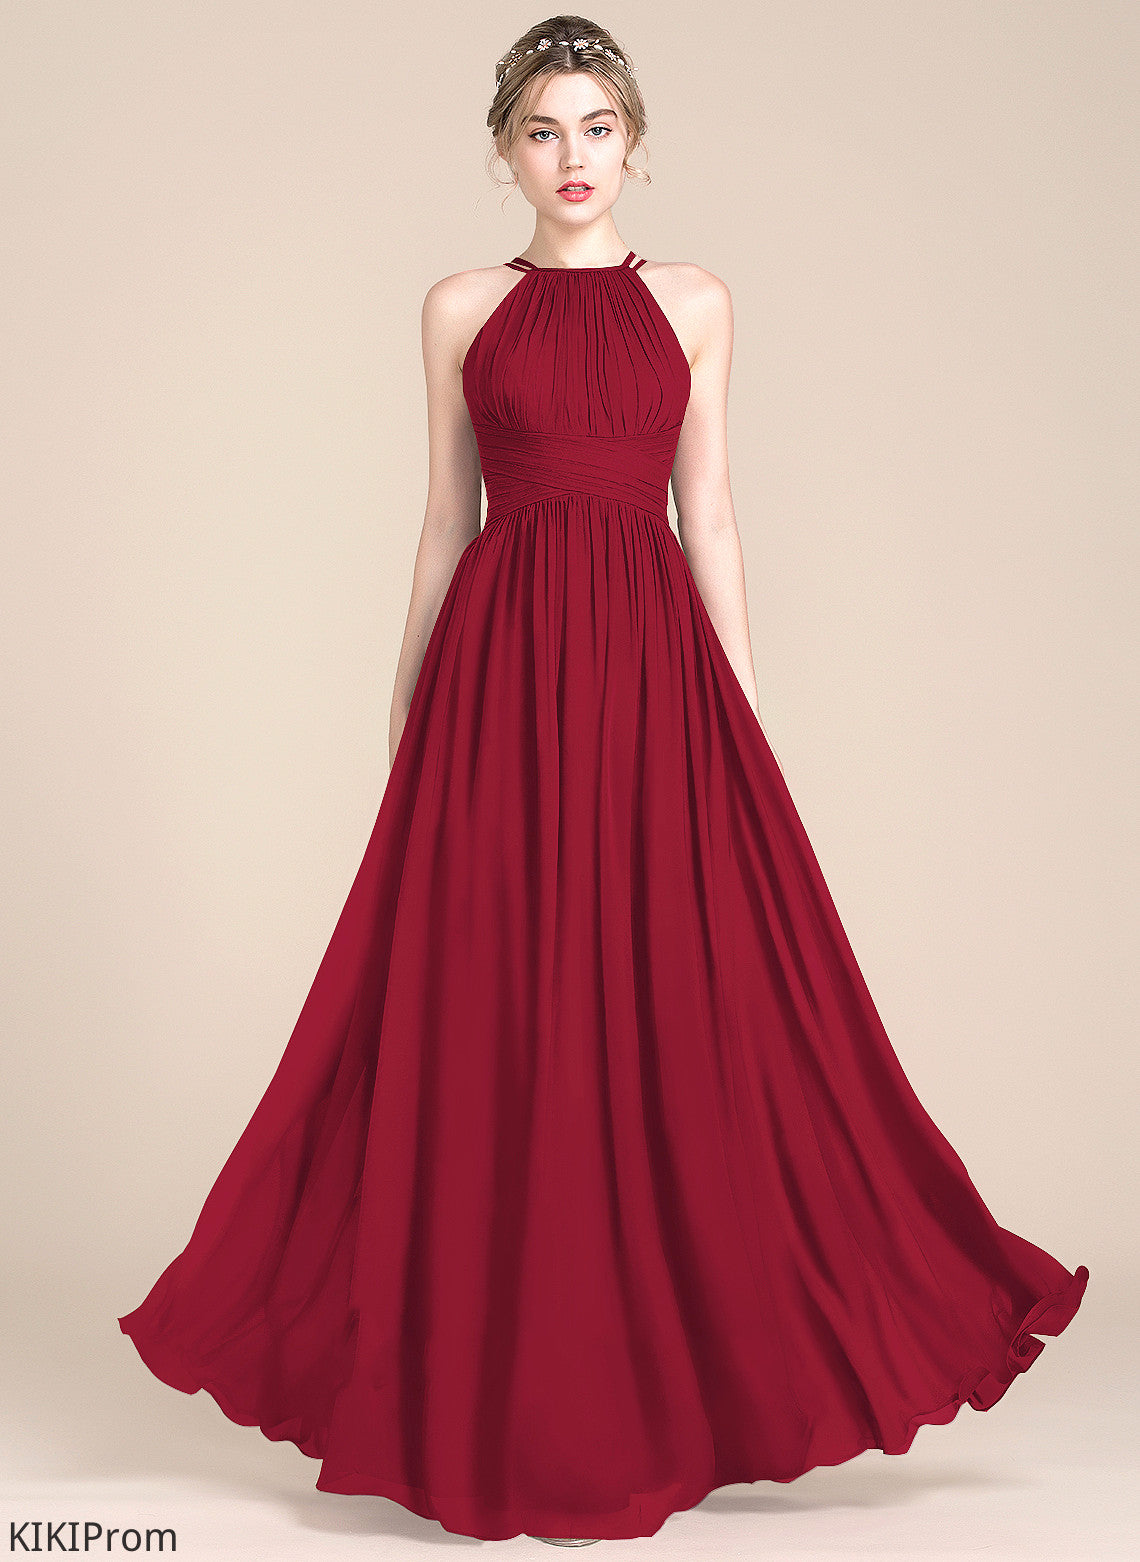 ScoopNeck Length Neckline Ruffle A-Line Floor-Length Silhouette Fabric Embellishment Emely Bridesmaid Dresses